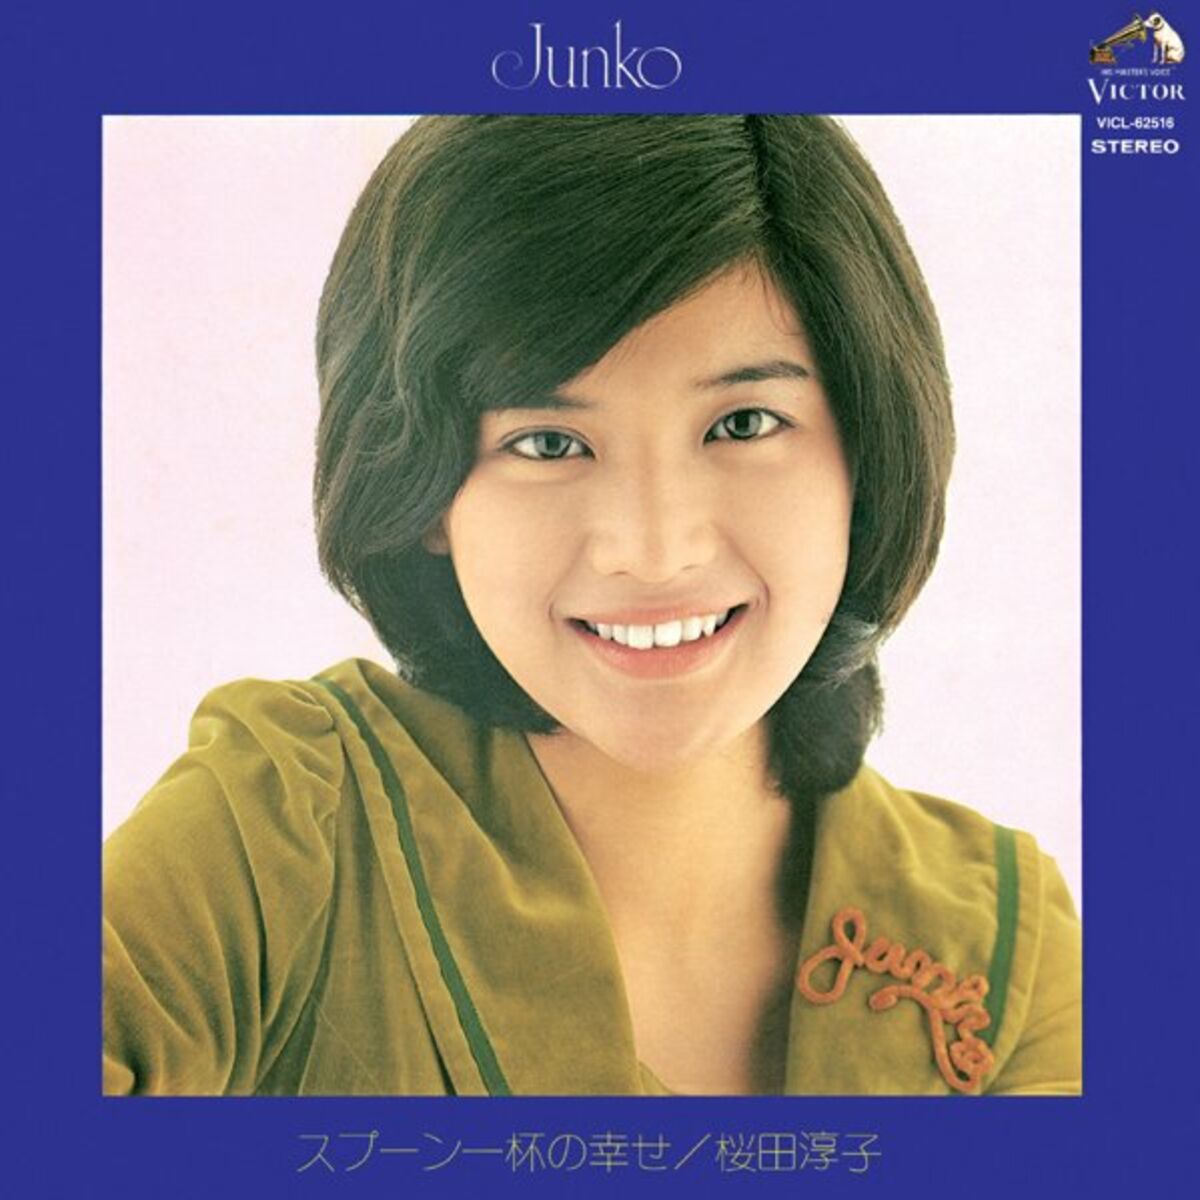 Junko Sakurada: albums